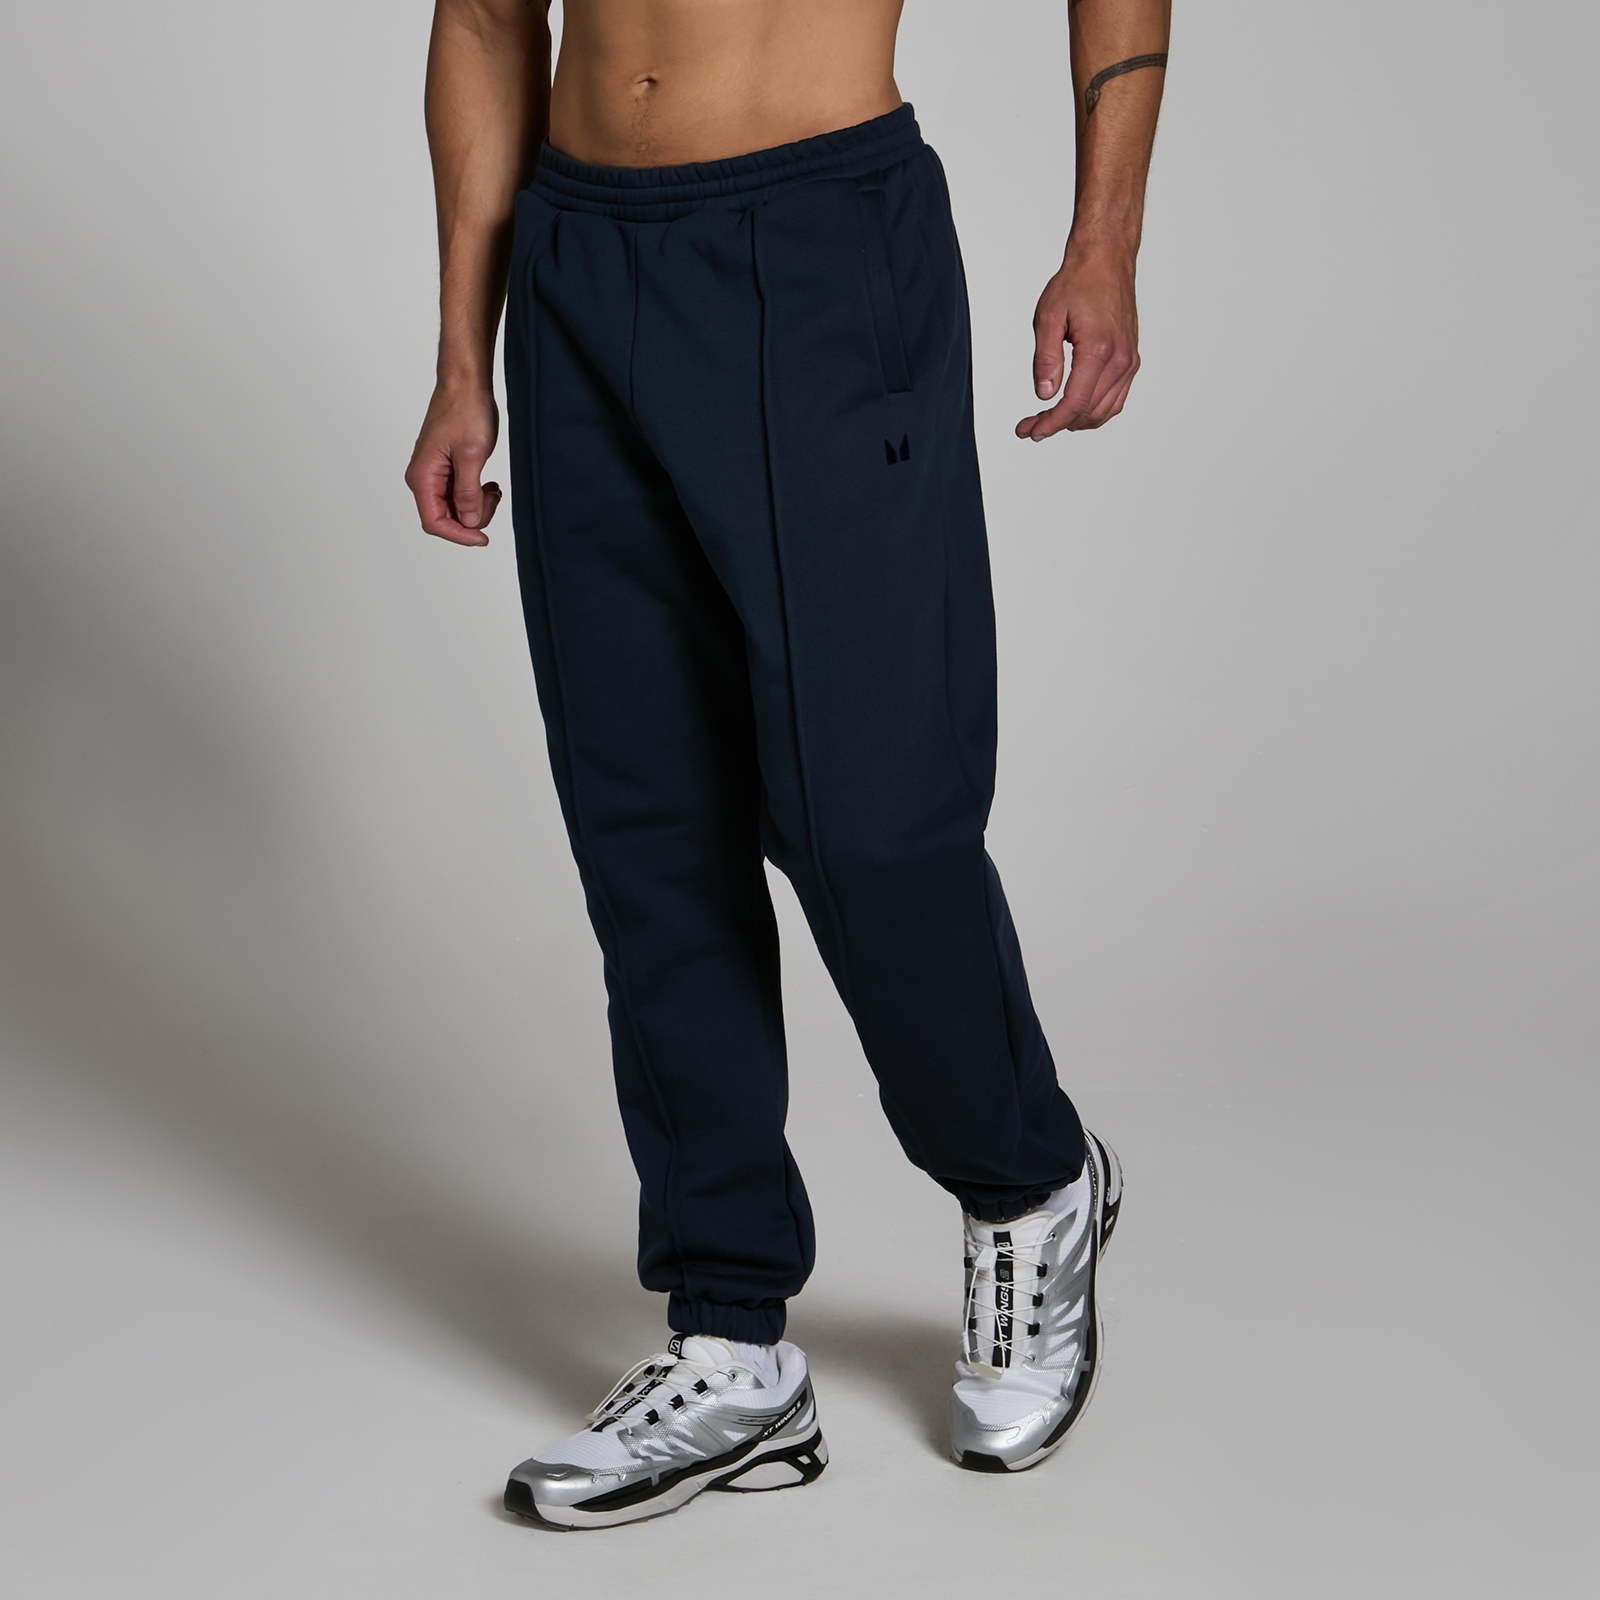 Image of Pantaloni da jogging oversize MP Lifestyle da uomo - Blu navy scuro - L